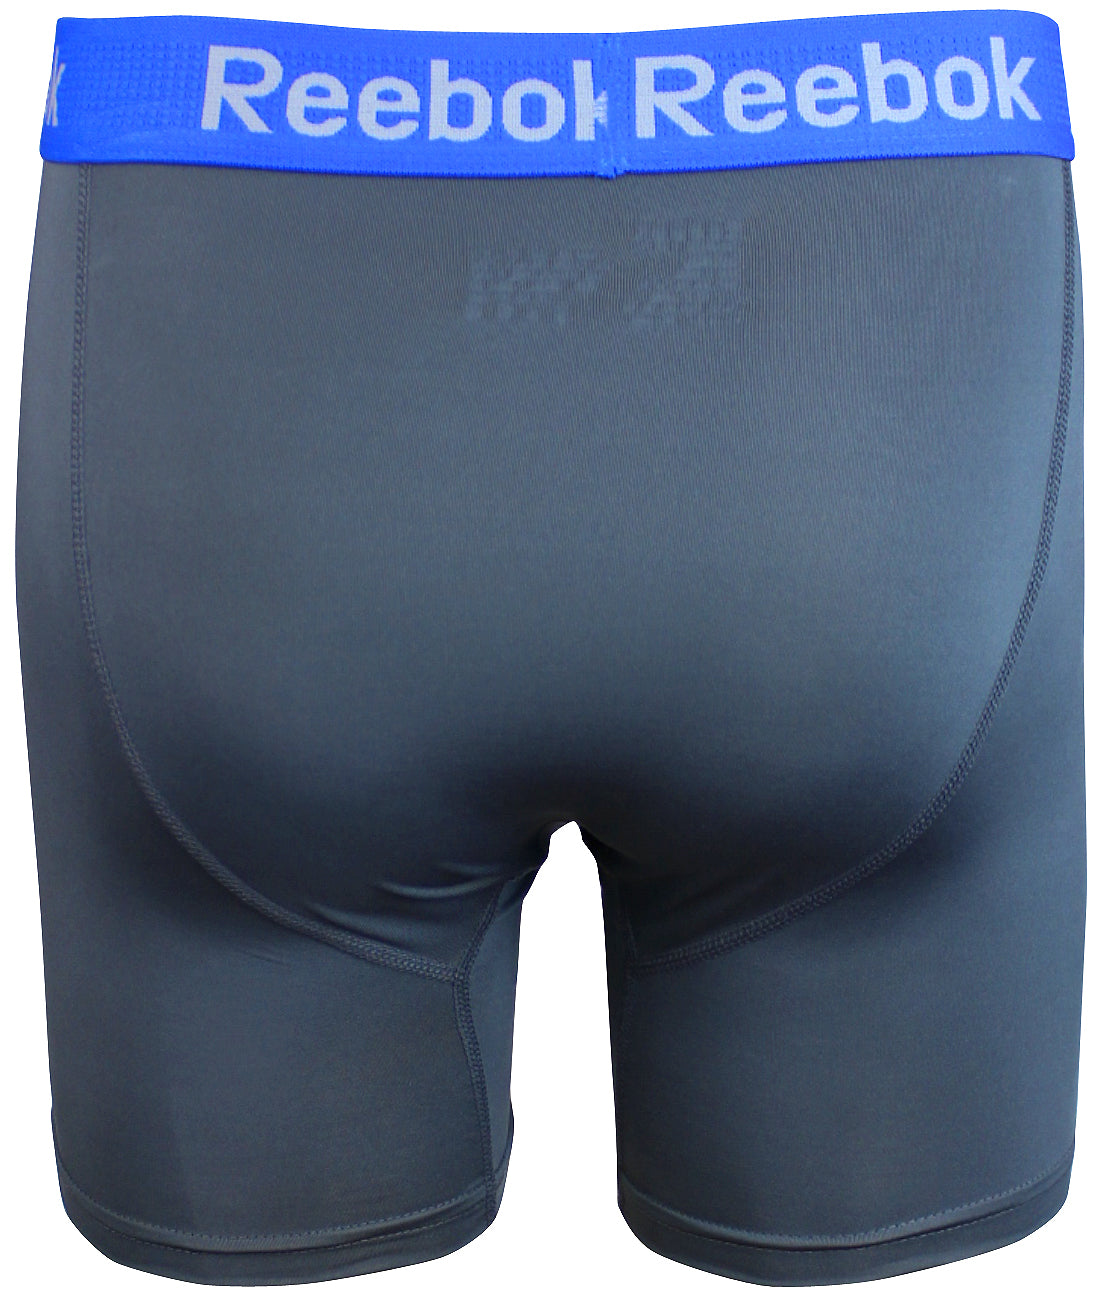 Reebok Men's Performance Training Boxer Briefs Grey Blue size